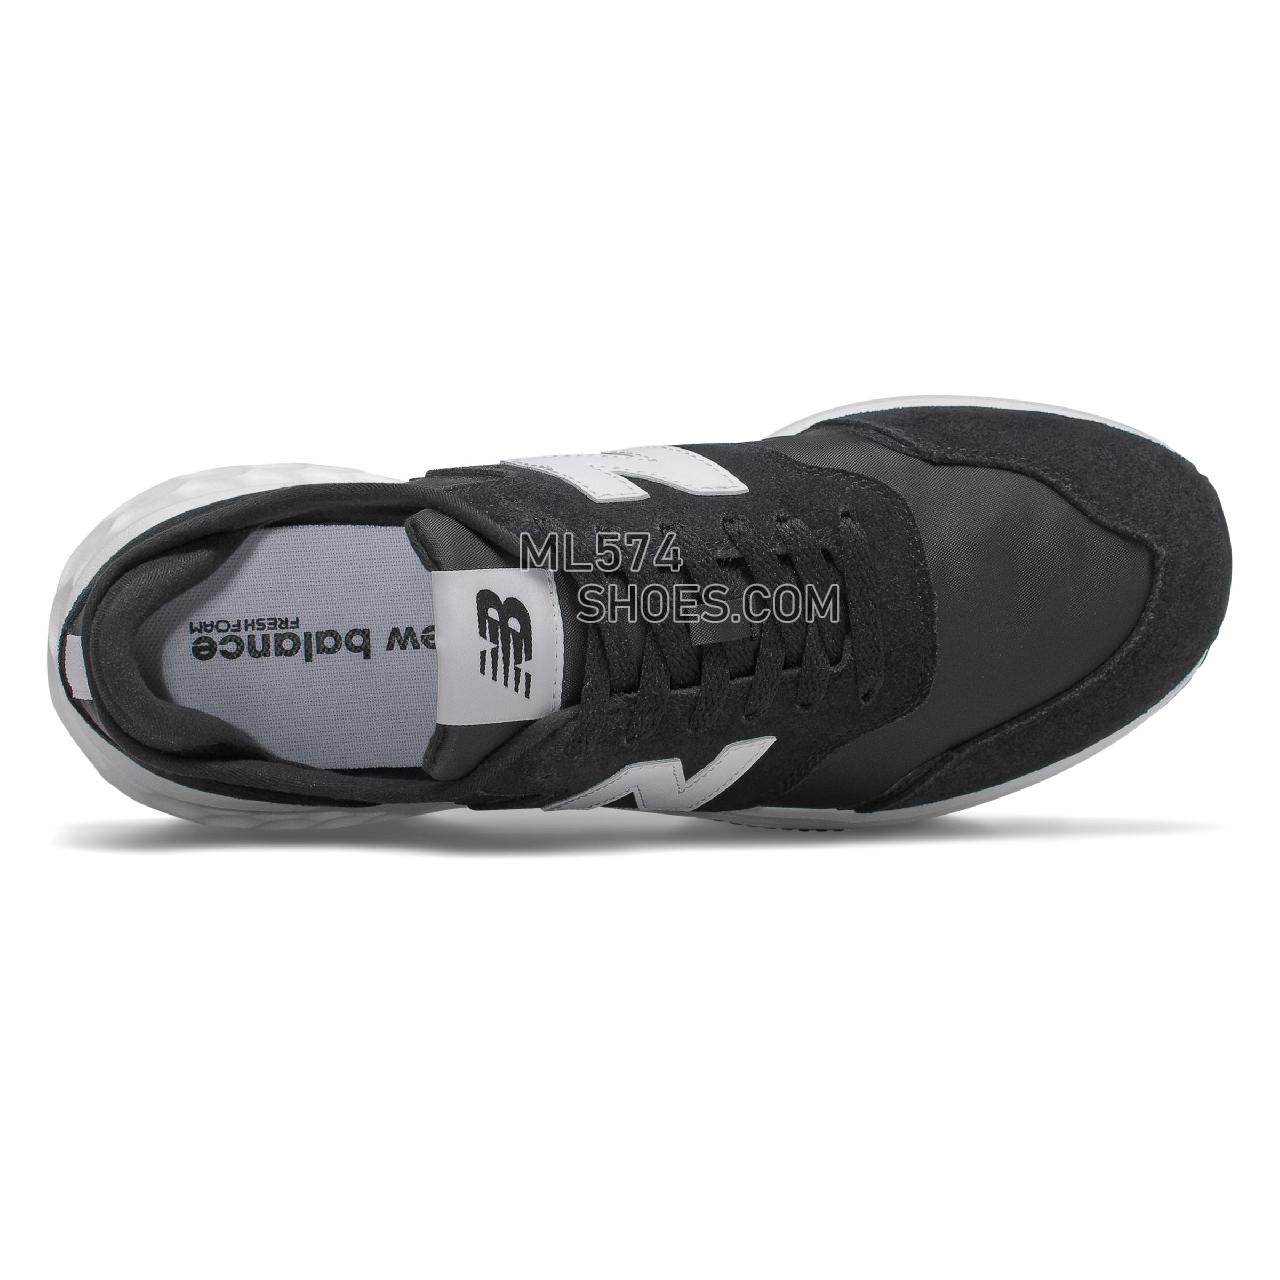 New Balance Fresh Foam X-70 - Men's Sport Style Sneakers - Black with Munsell White - MSX70CD